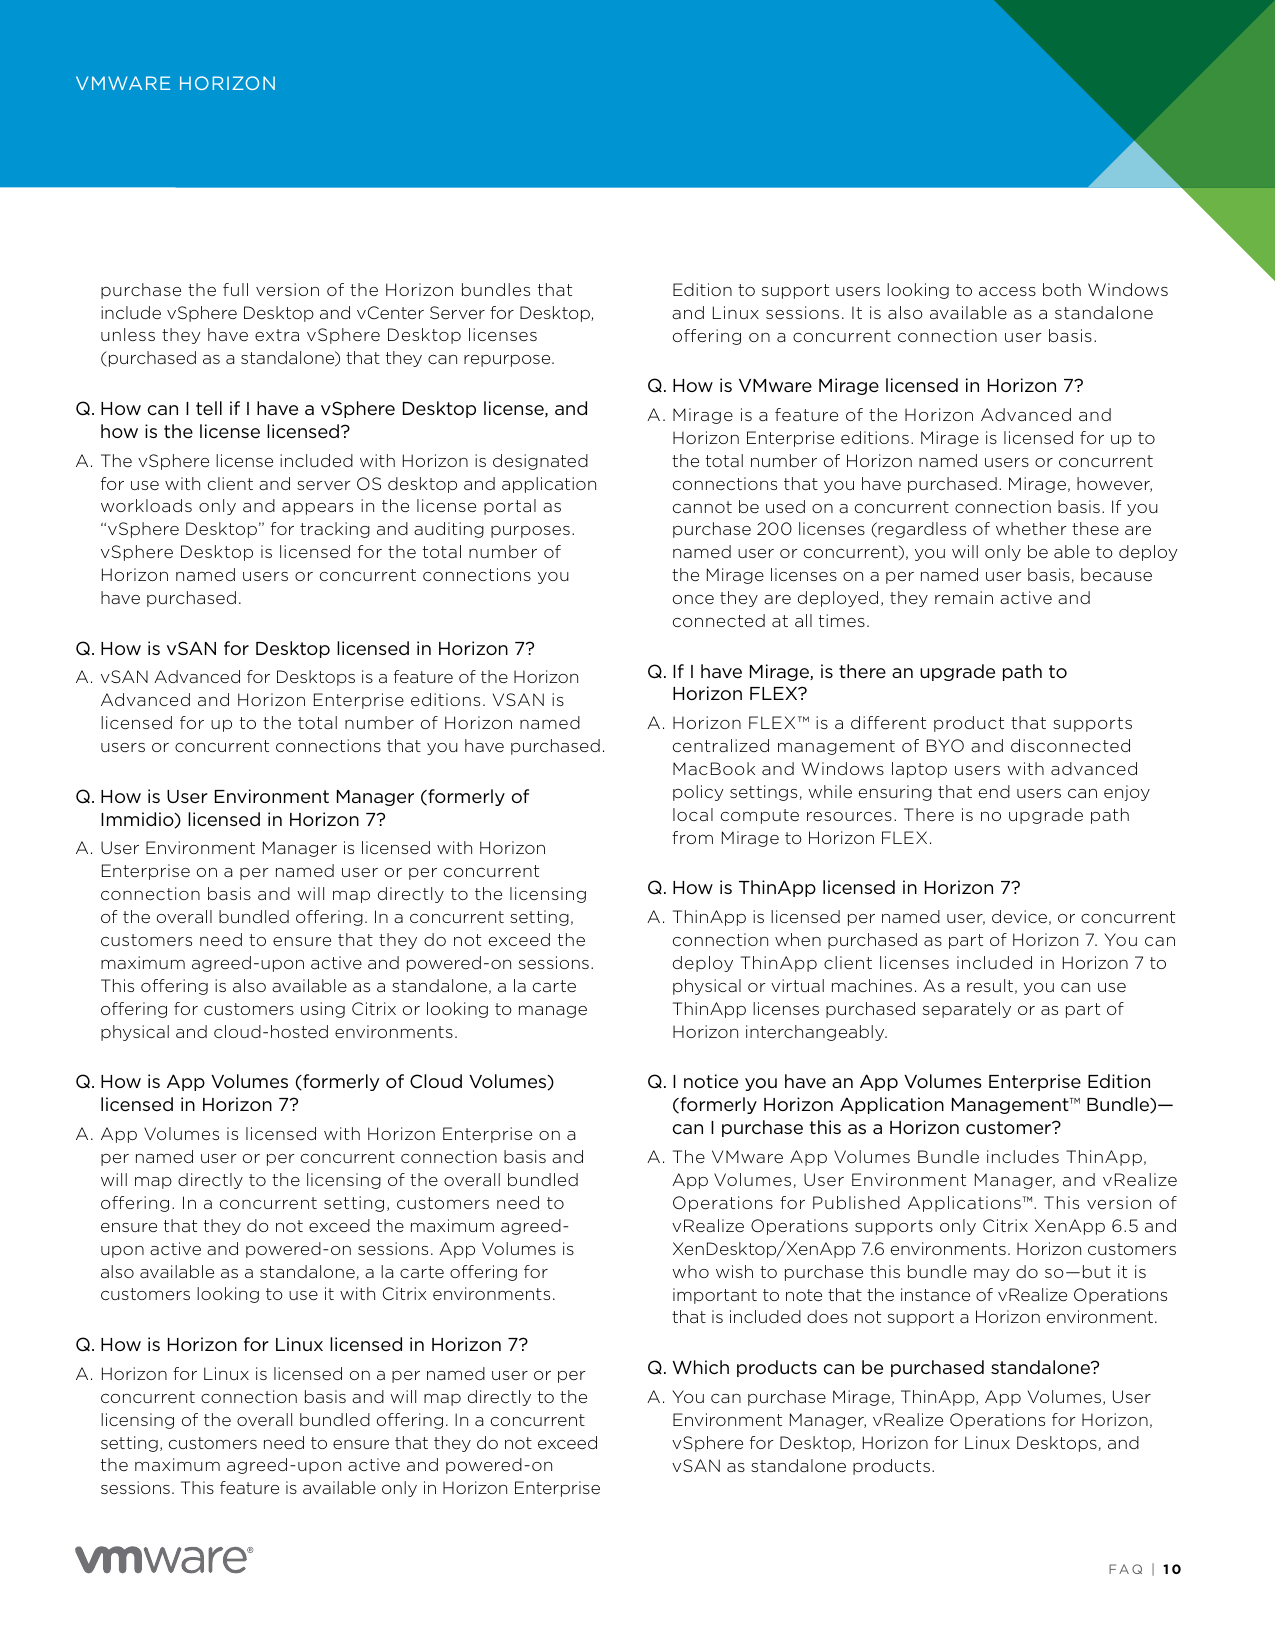 Page 10 of 12 - VMware Horizon 7 FAQ Vmware-horizon-7-faq